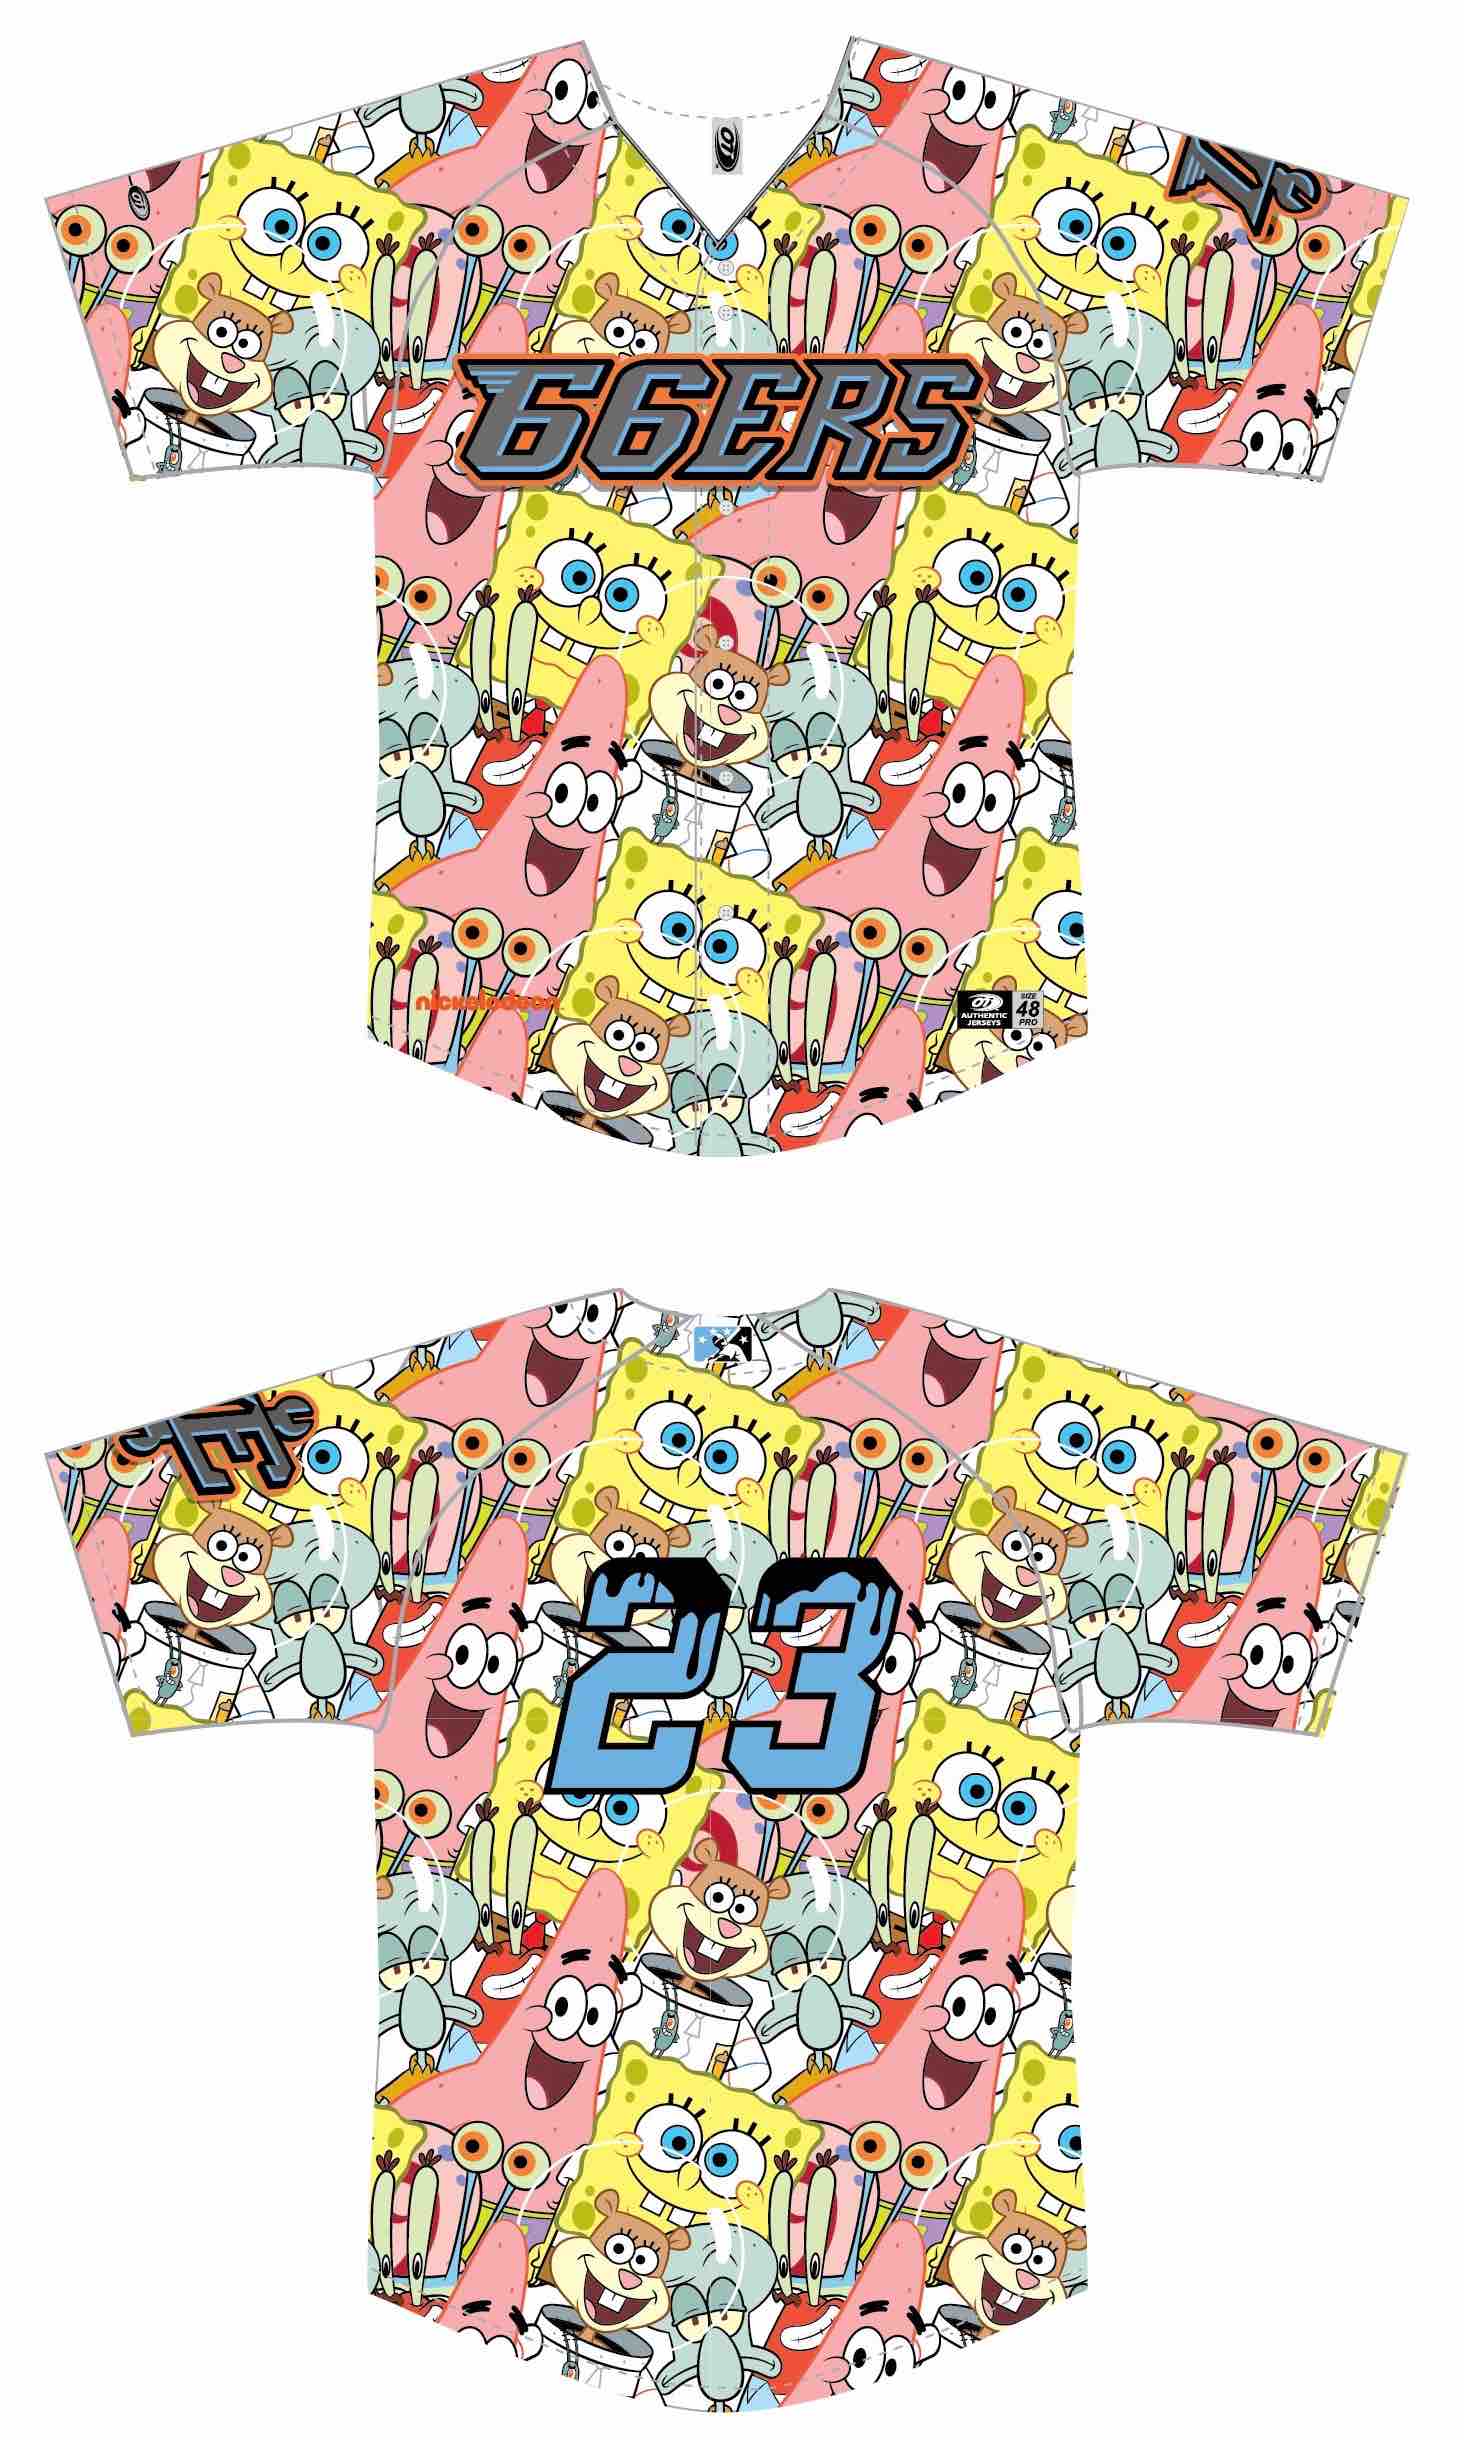 spongebob baseball jersey